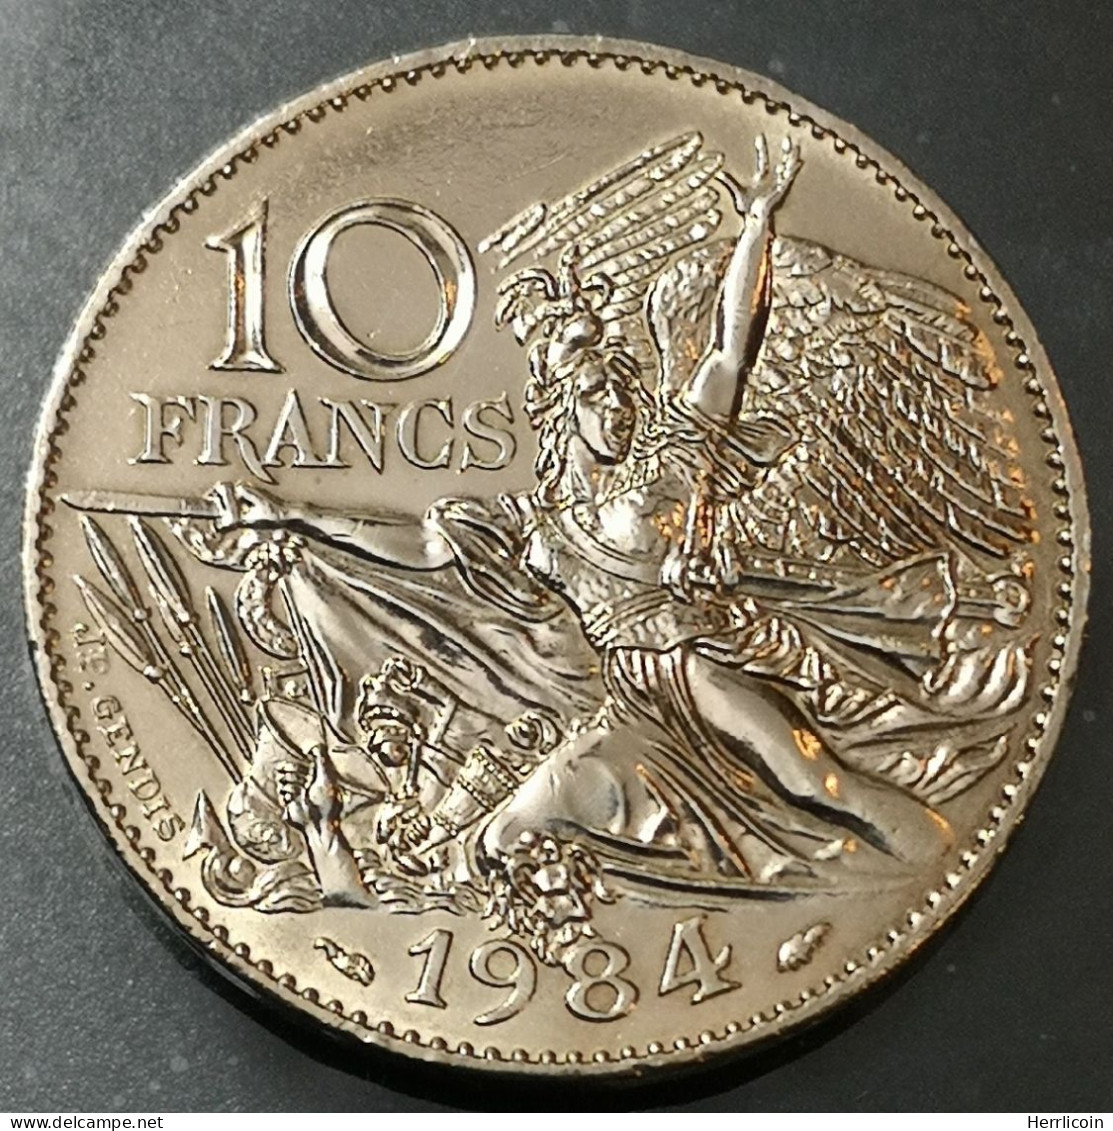 Monnaie France - 1984 - 10 Francs François Rude - Tranche A - Conmemorativos